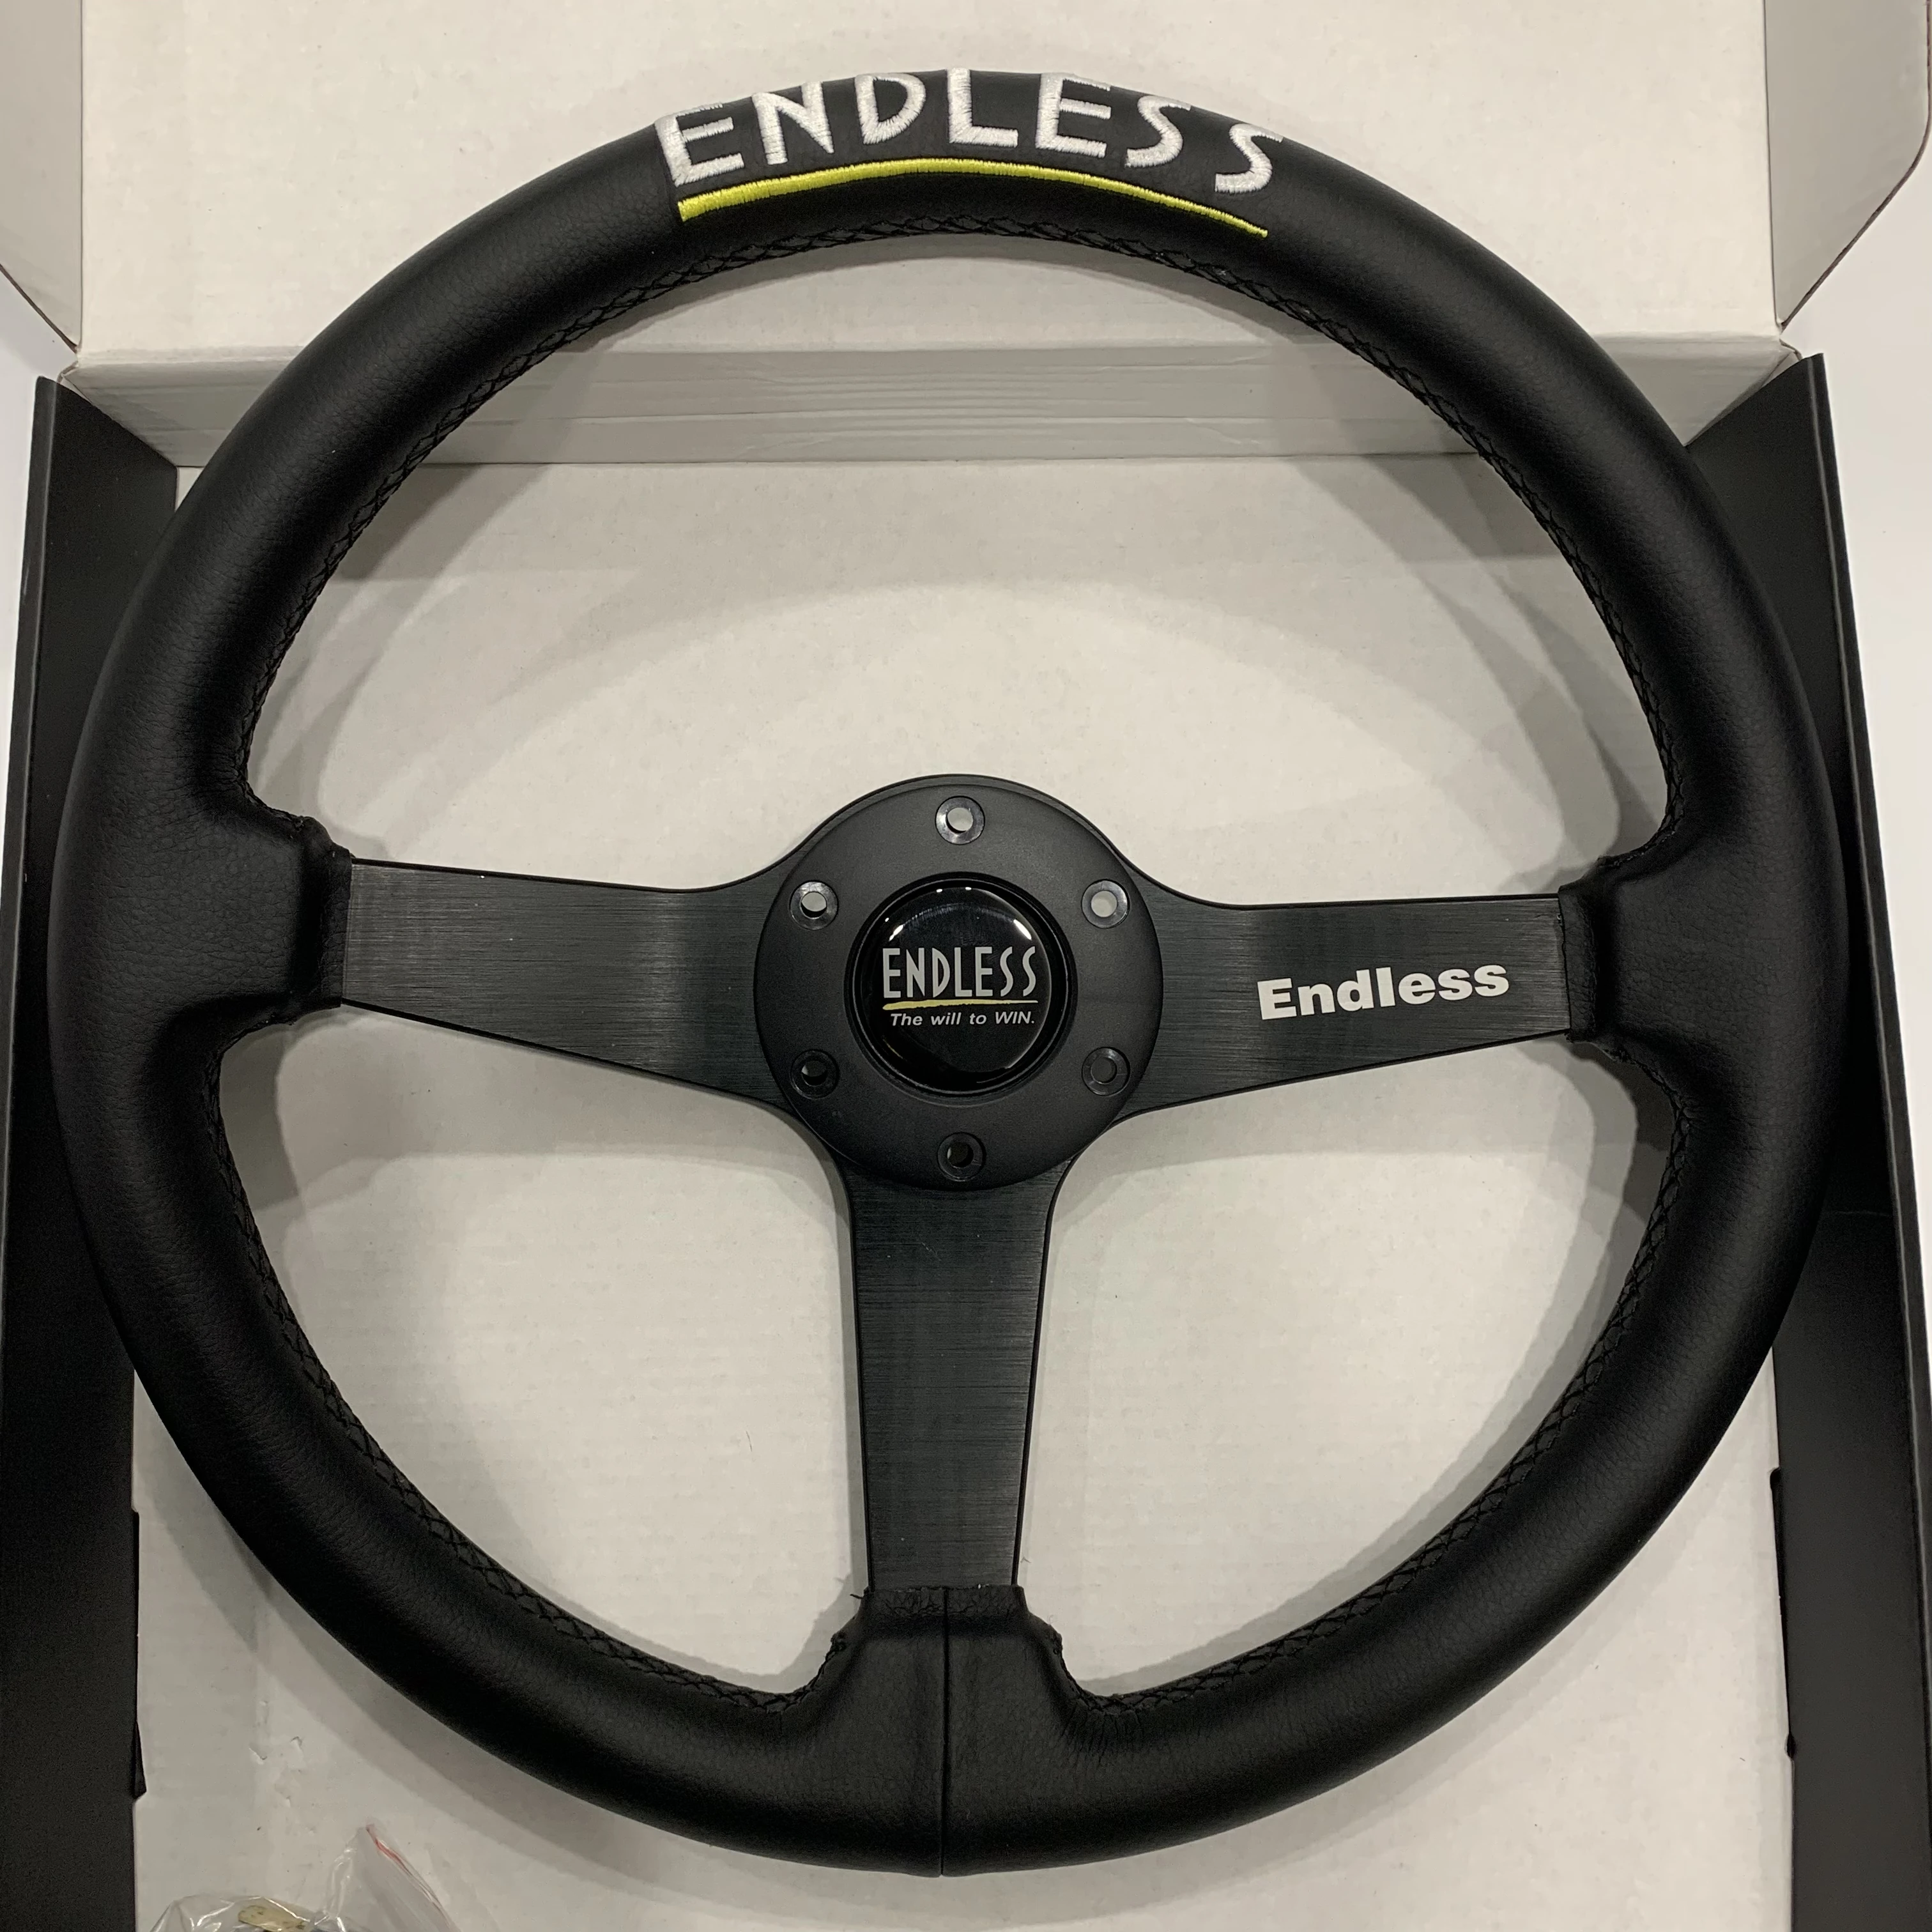 

universal JDM Sports ENDLESS steering wheel pc simulator Global limit wheel High performance car acesssories For Toyota Honda